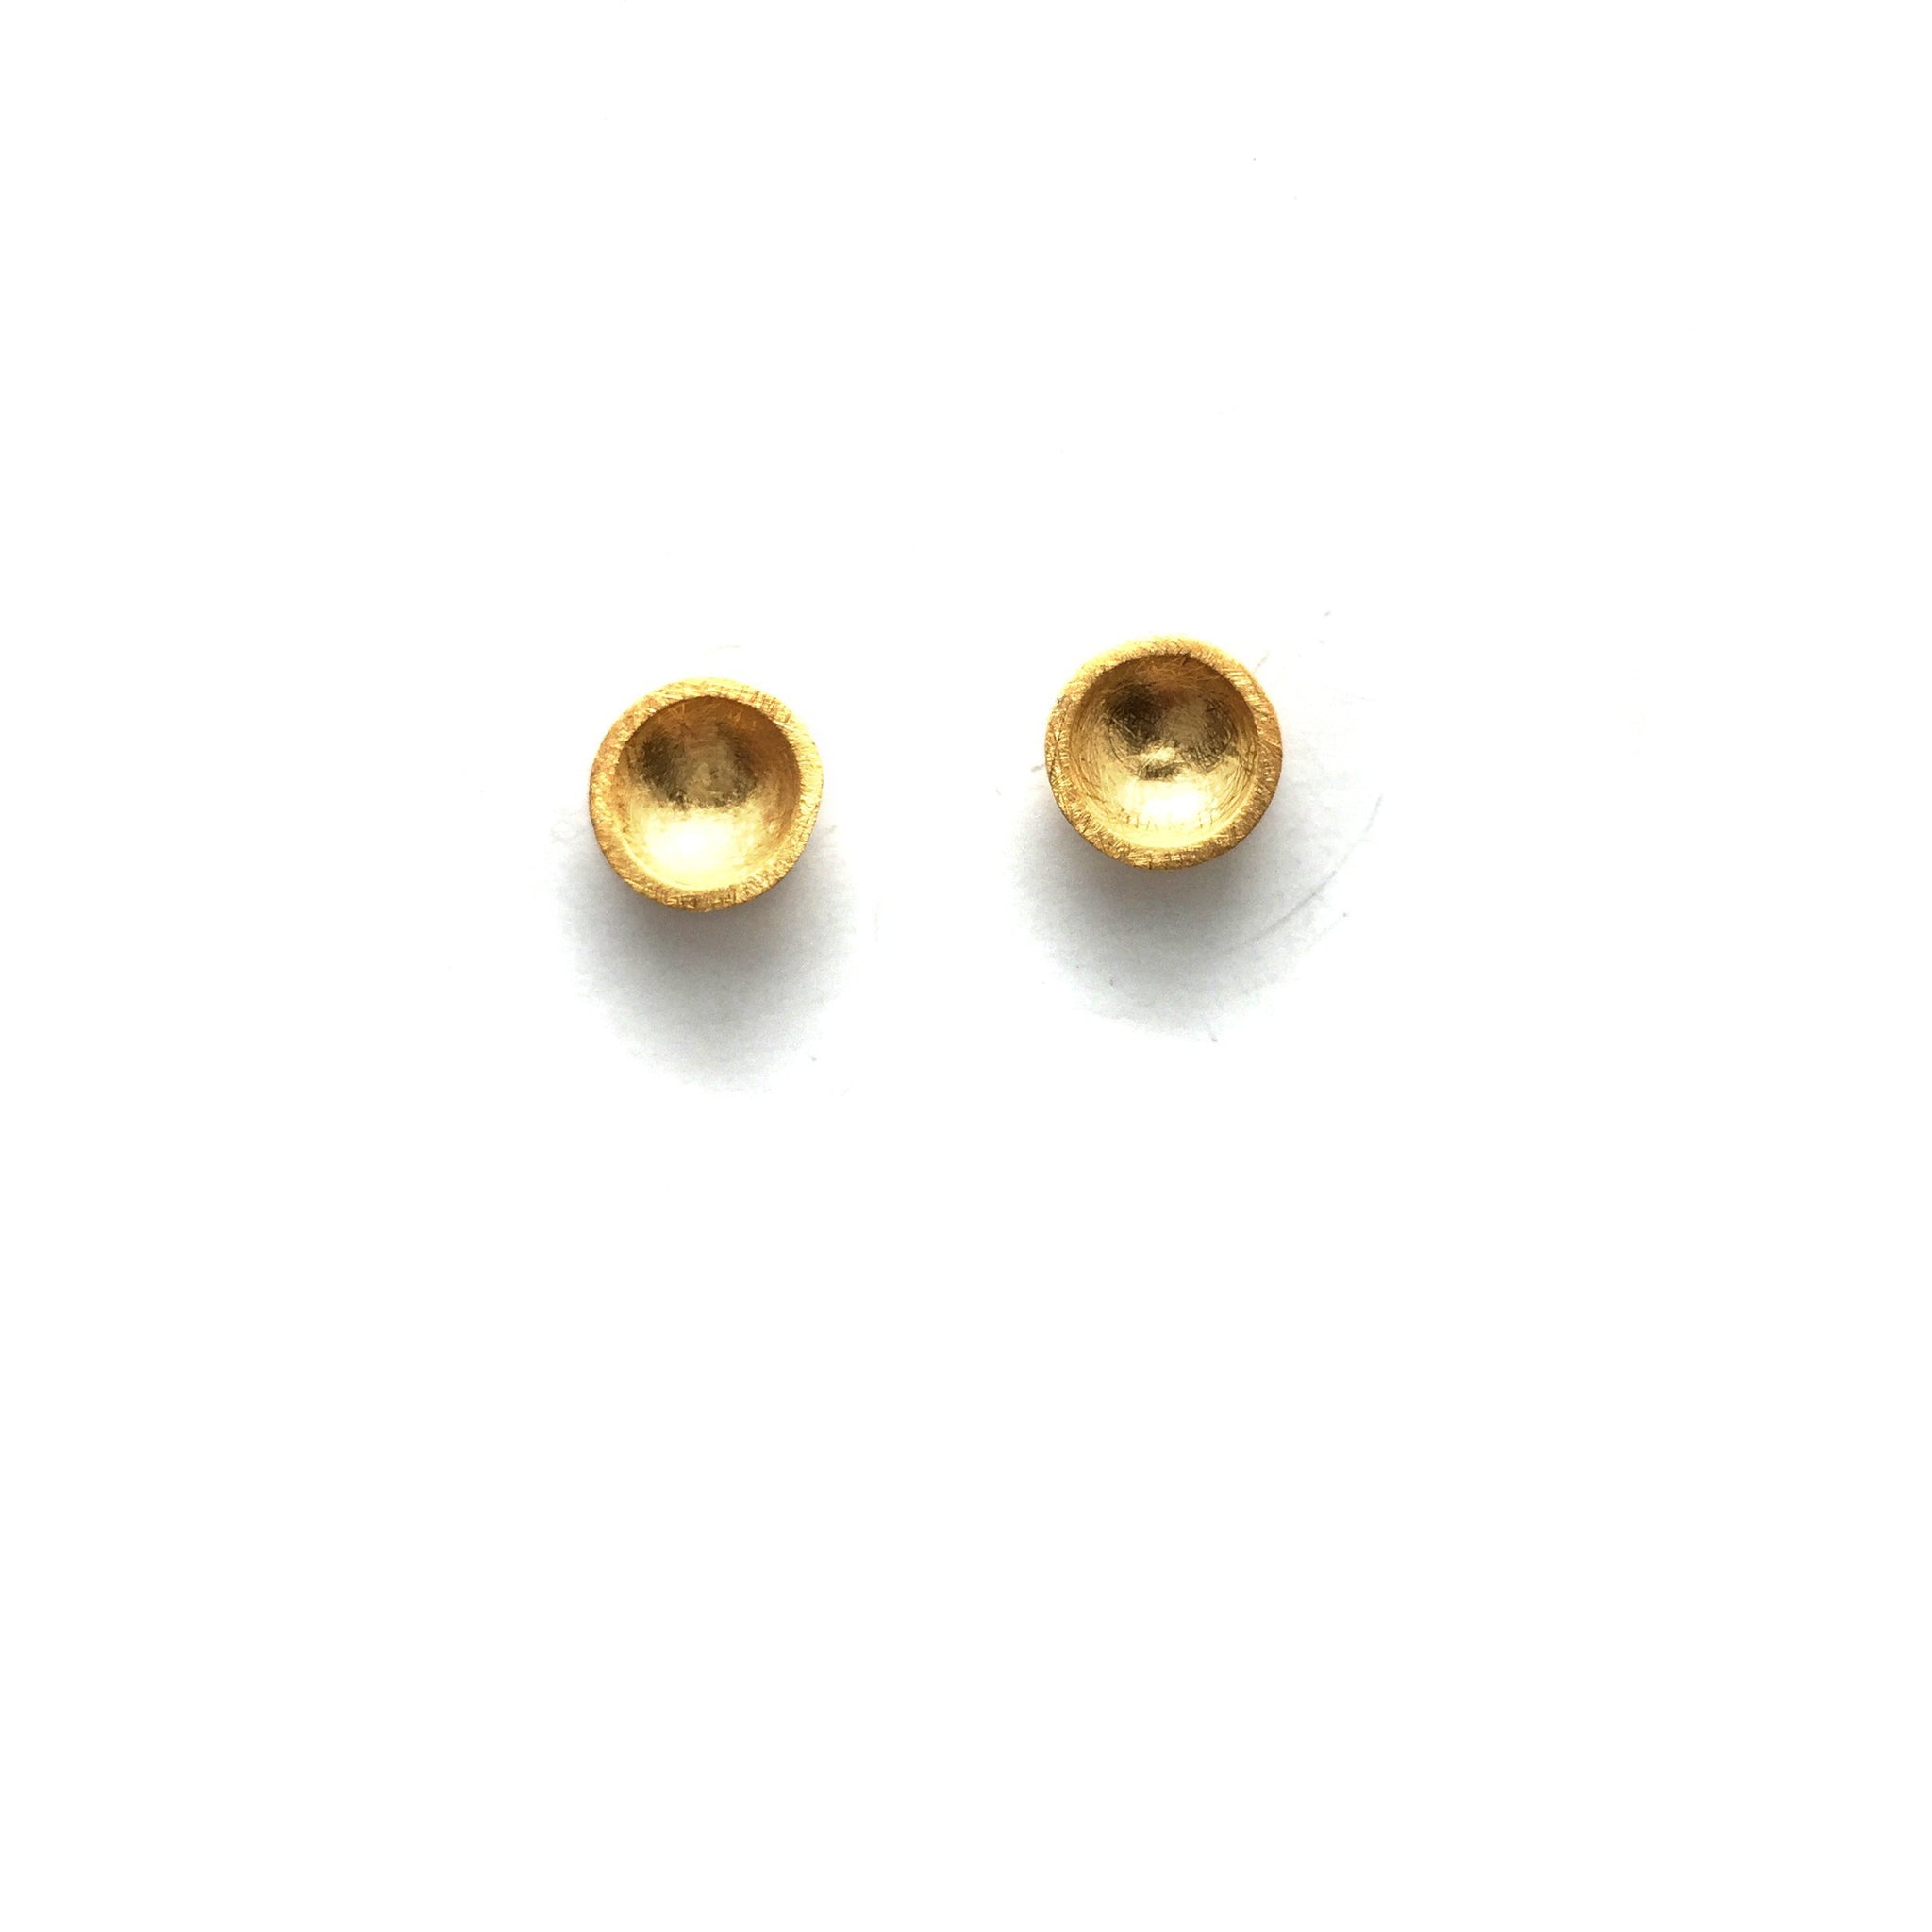 3mm Ball Stud Piercing Earrings in 14K Solid Gold - Short Post | Banter